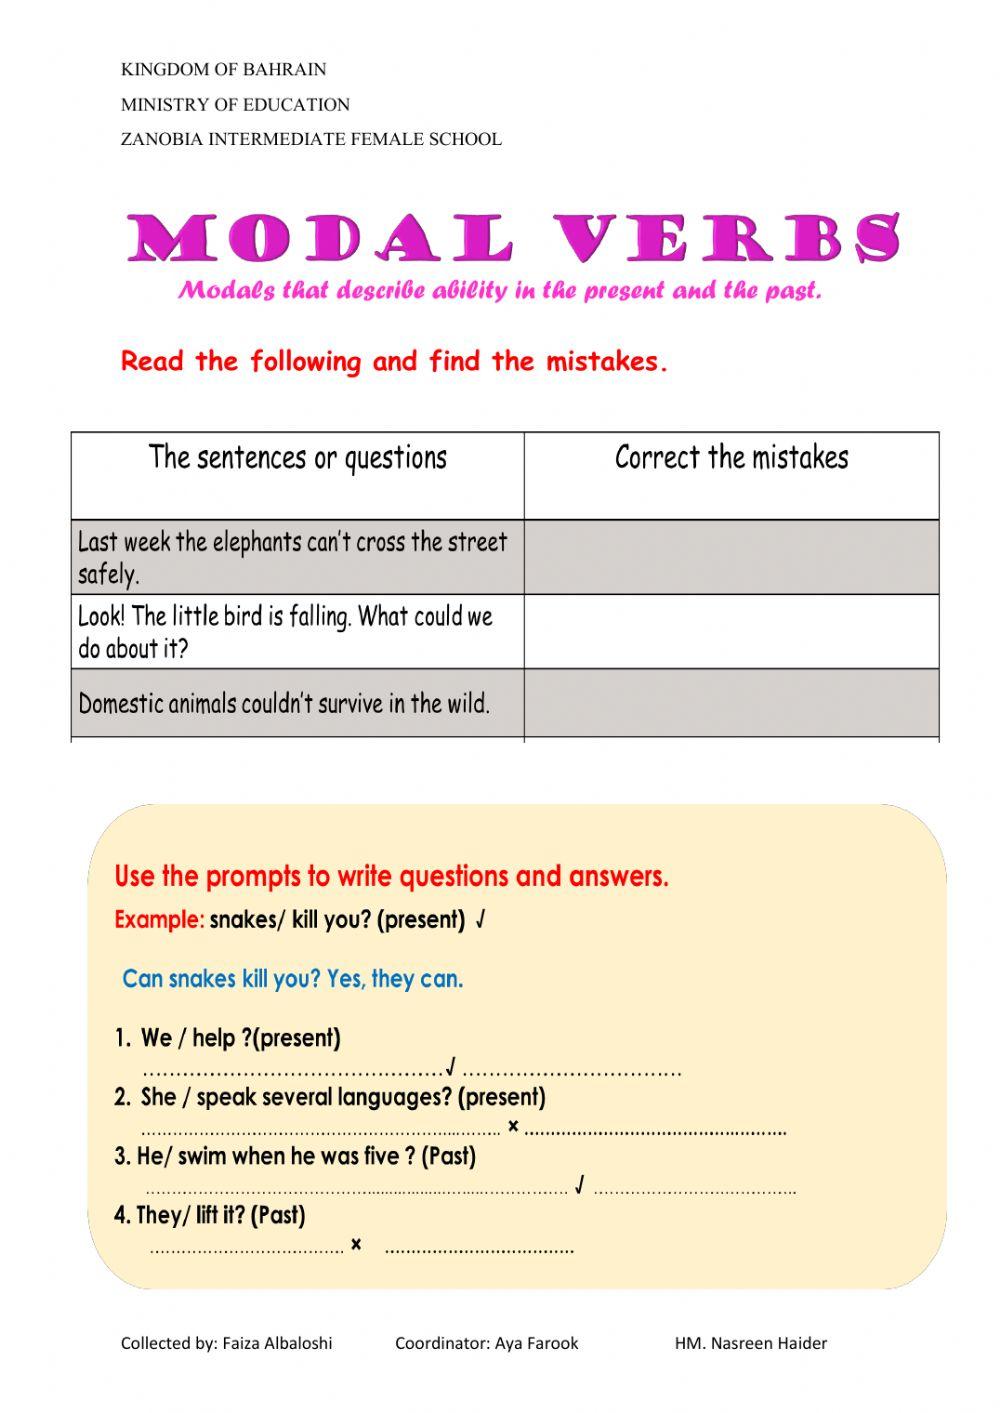 Modal verbs part 2